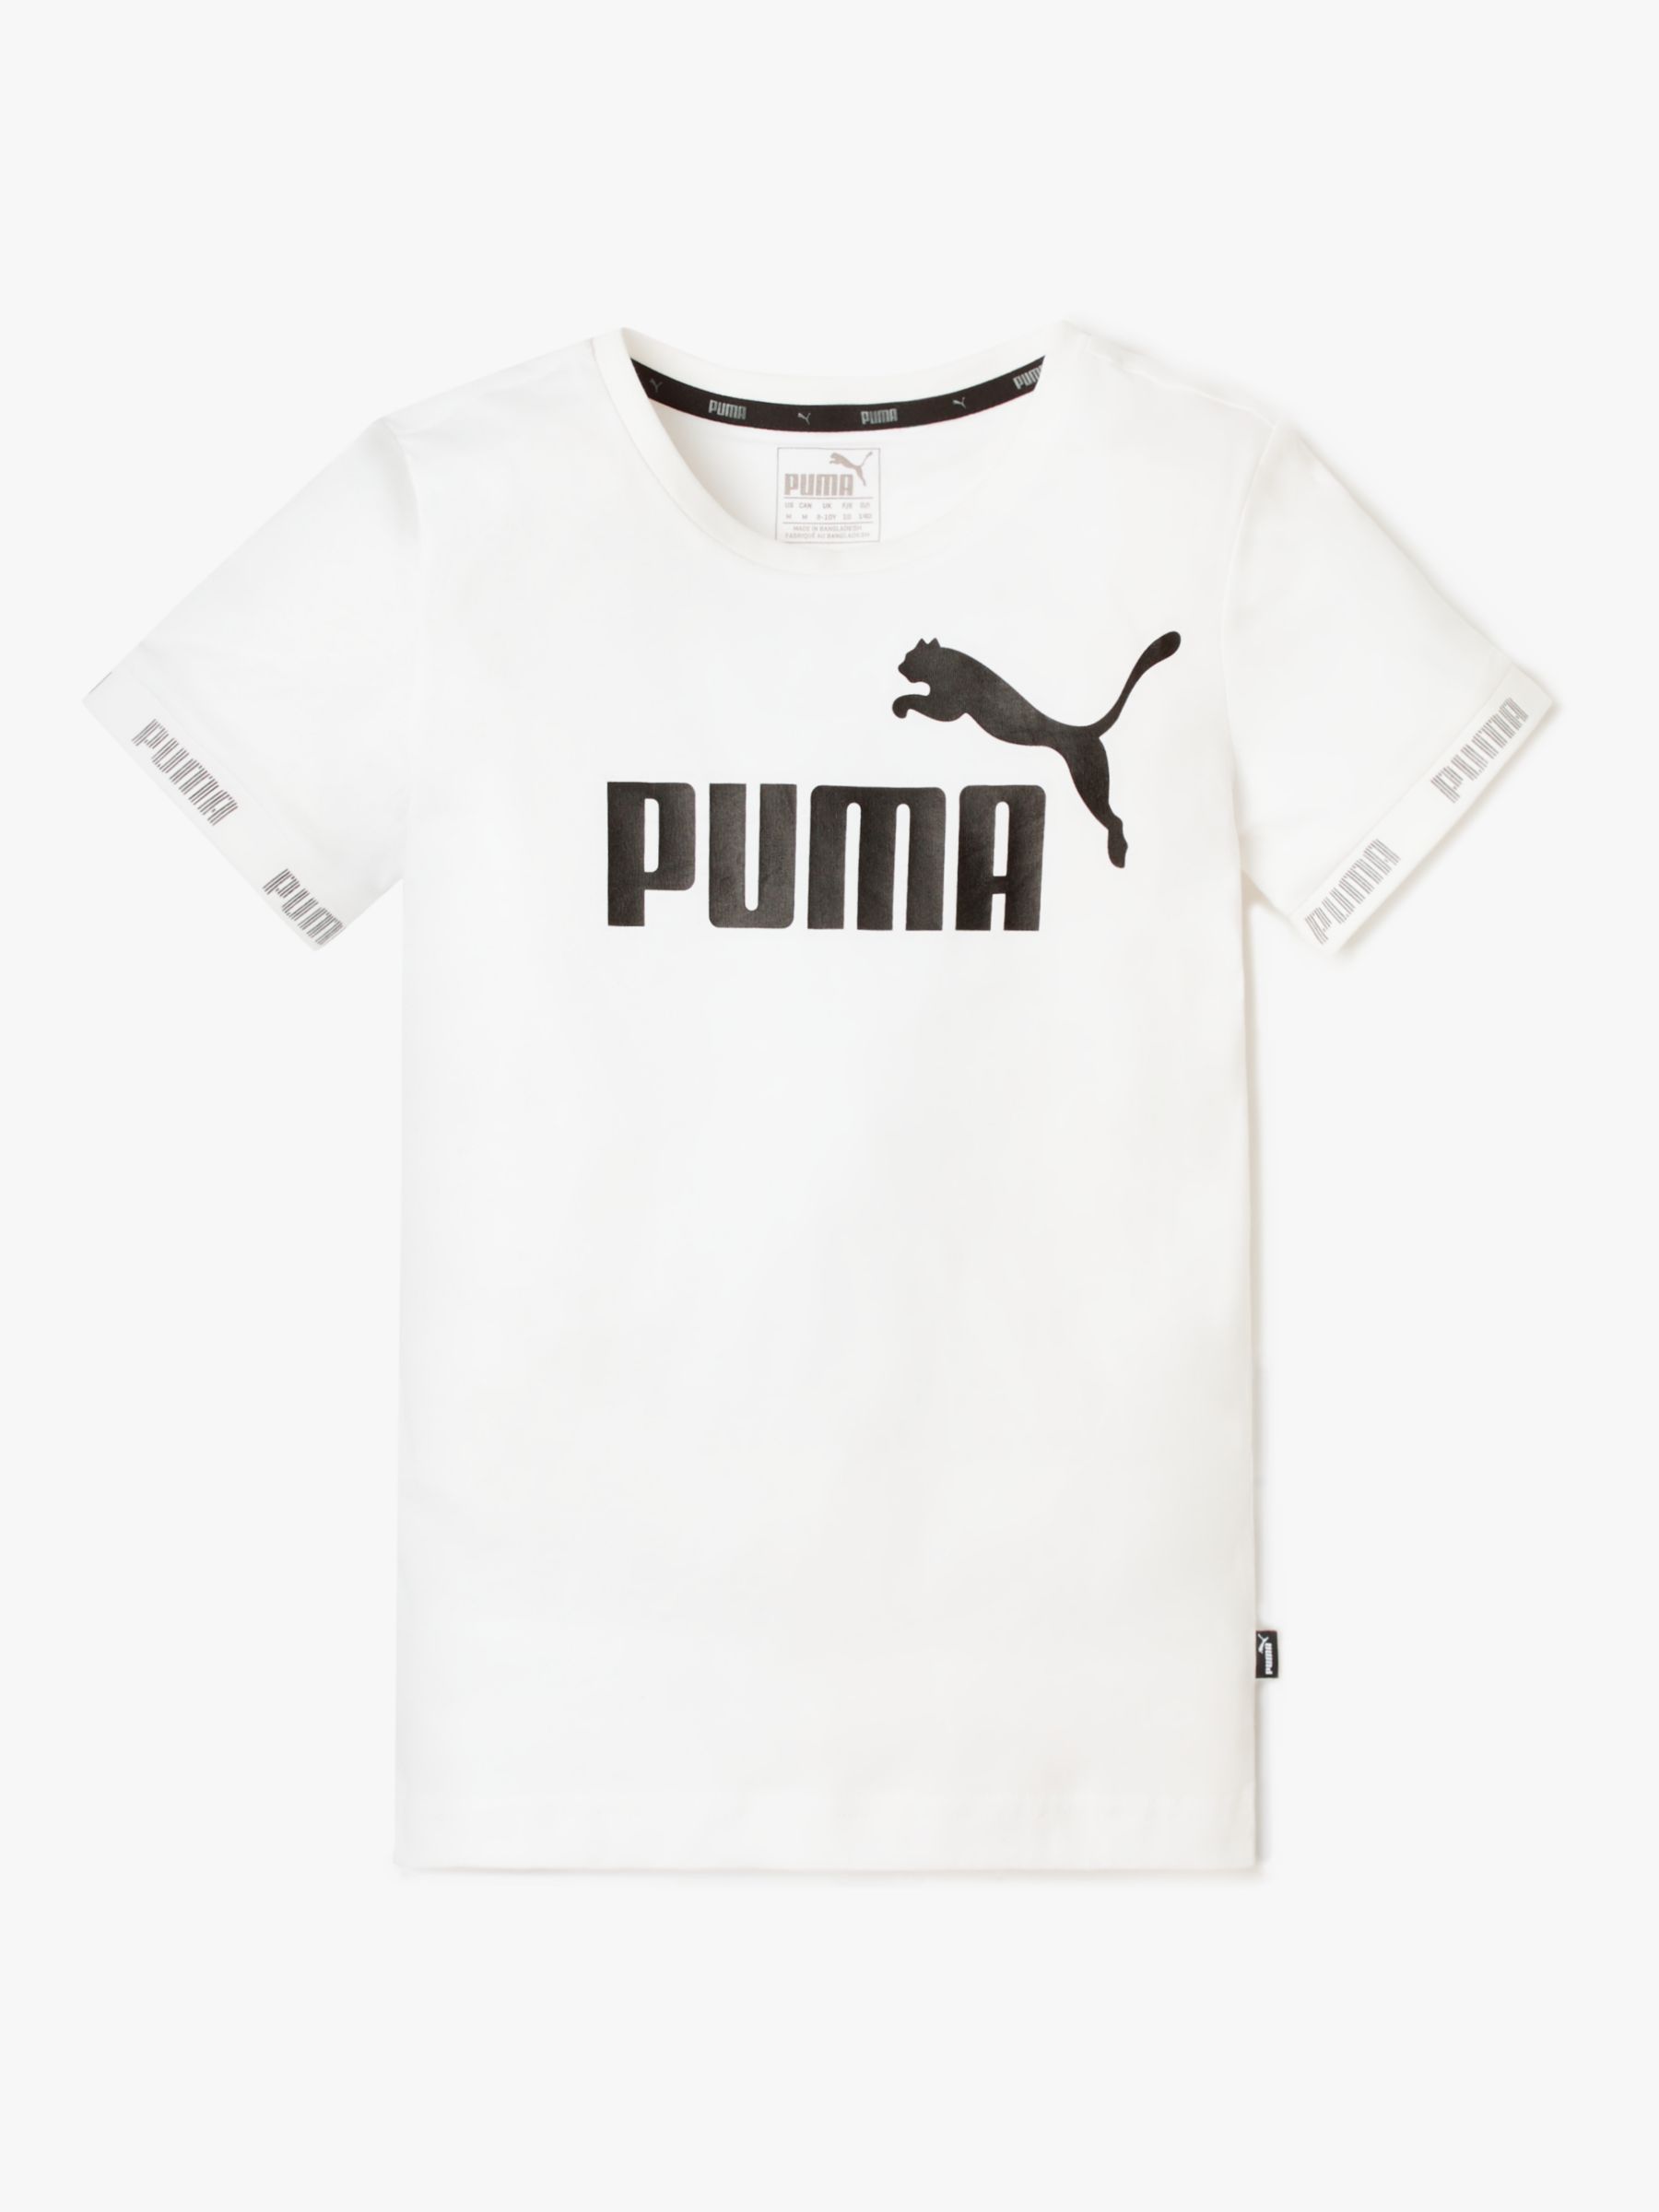 boys puma shirt